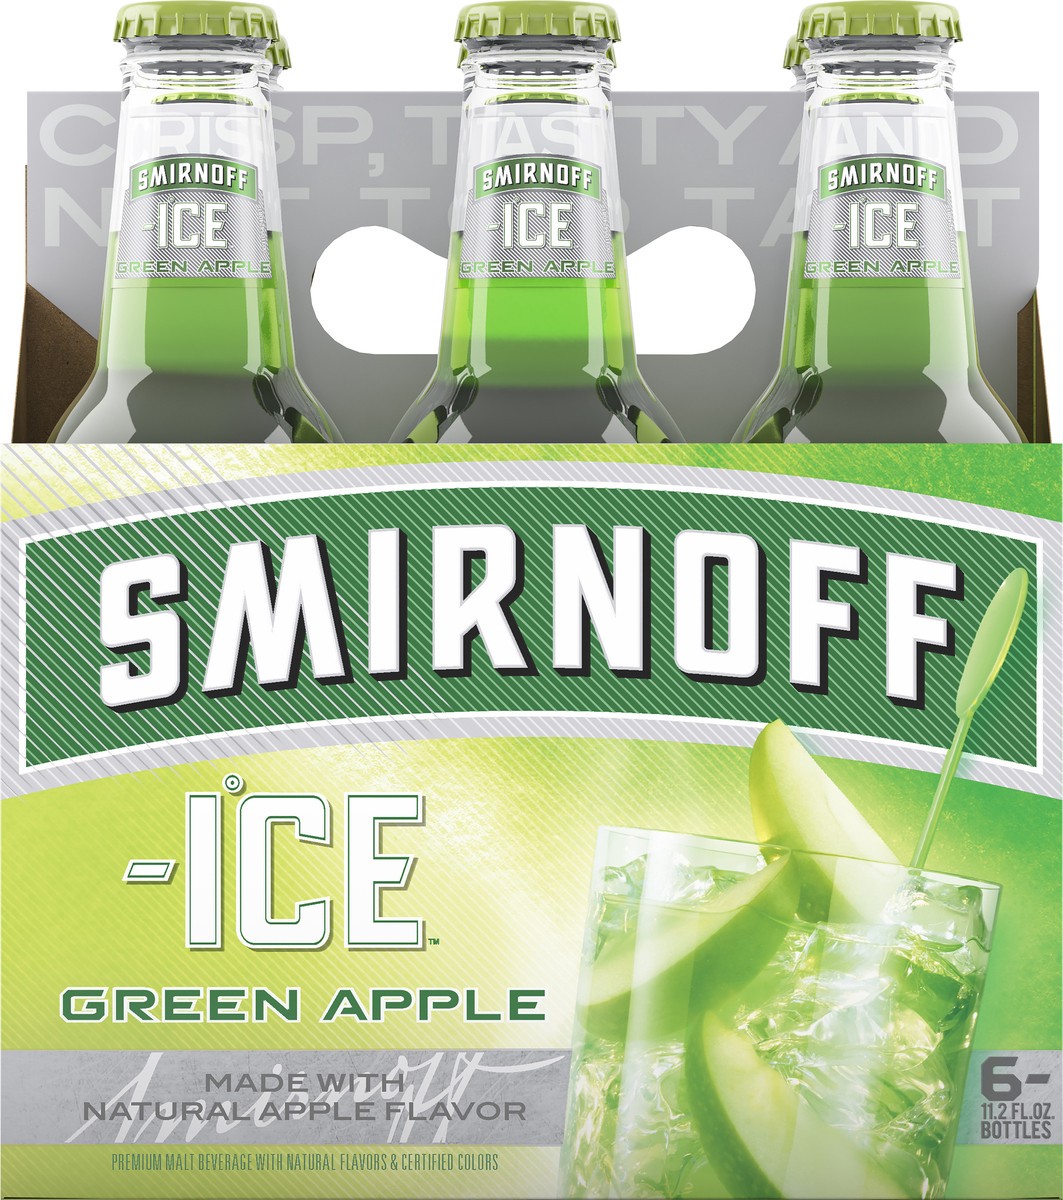 slide 2 of 3, Smirnoff Ice Green Apple Sparkling Drink, 11.2oz Bottles, 6pk, 11.2 fl oz